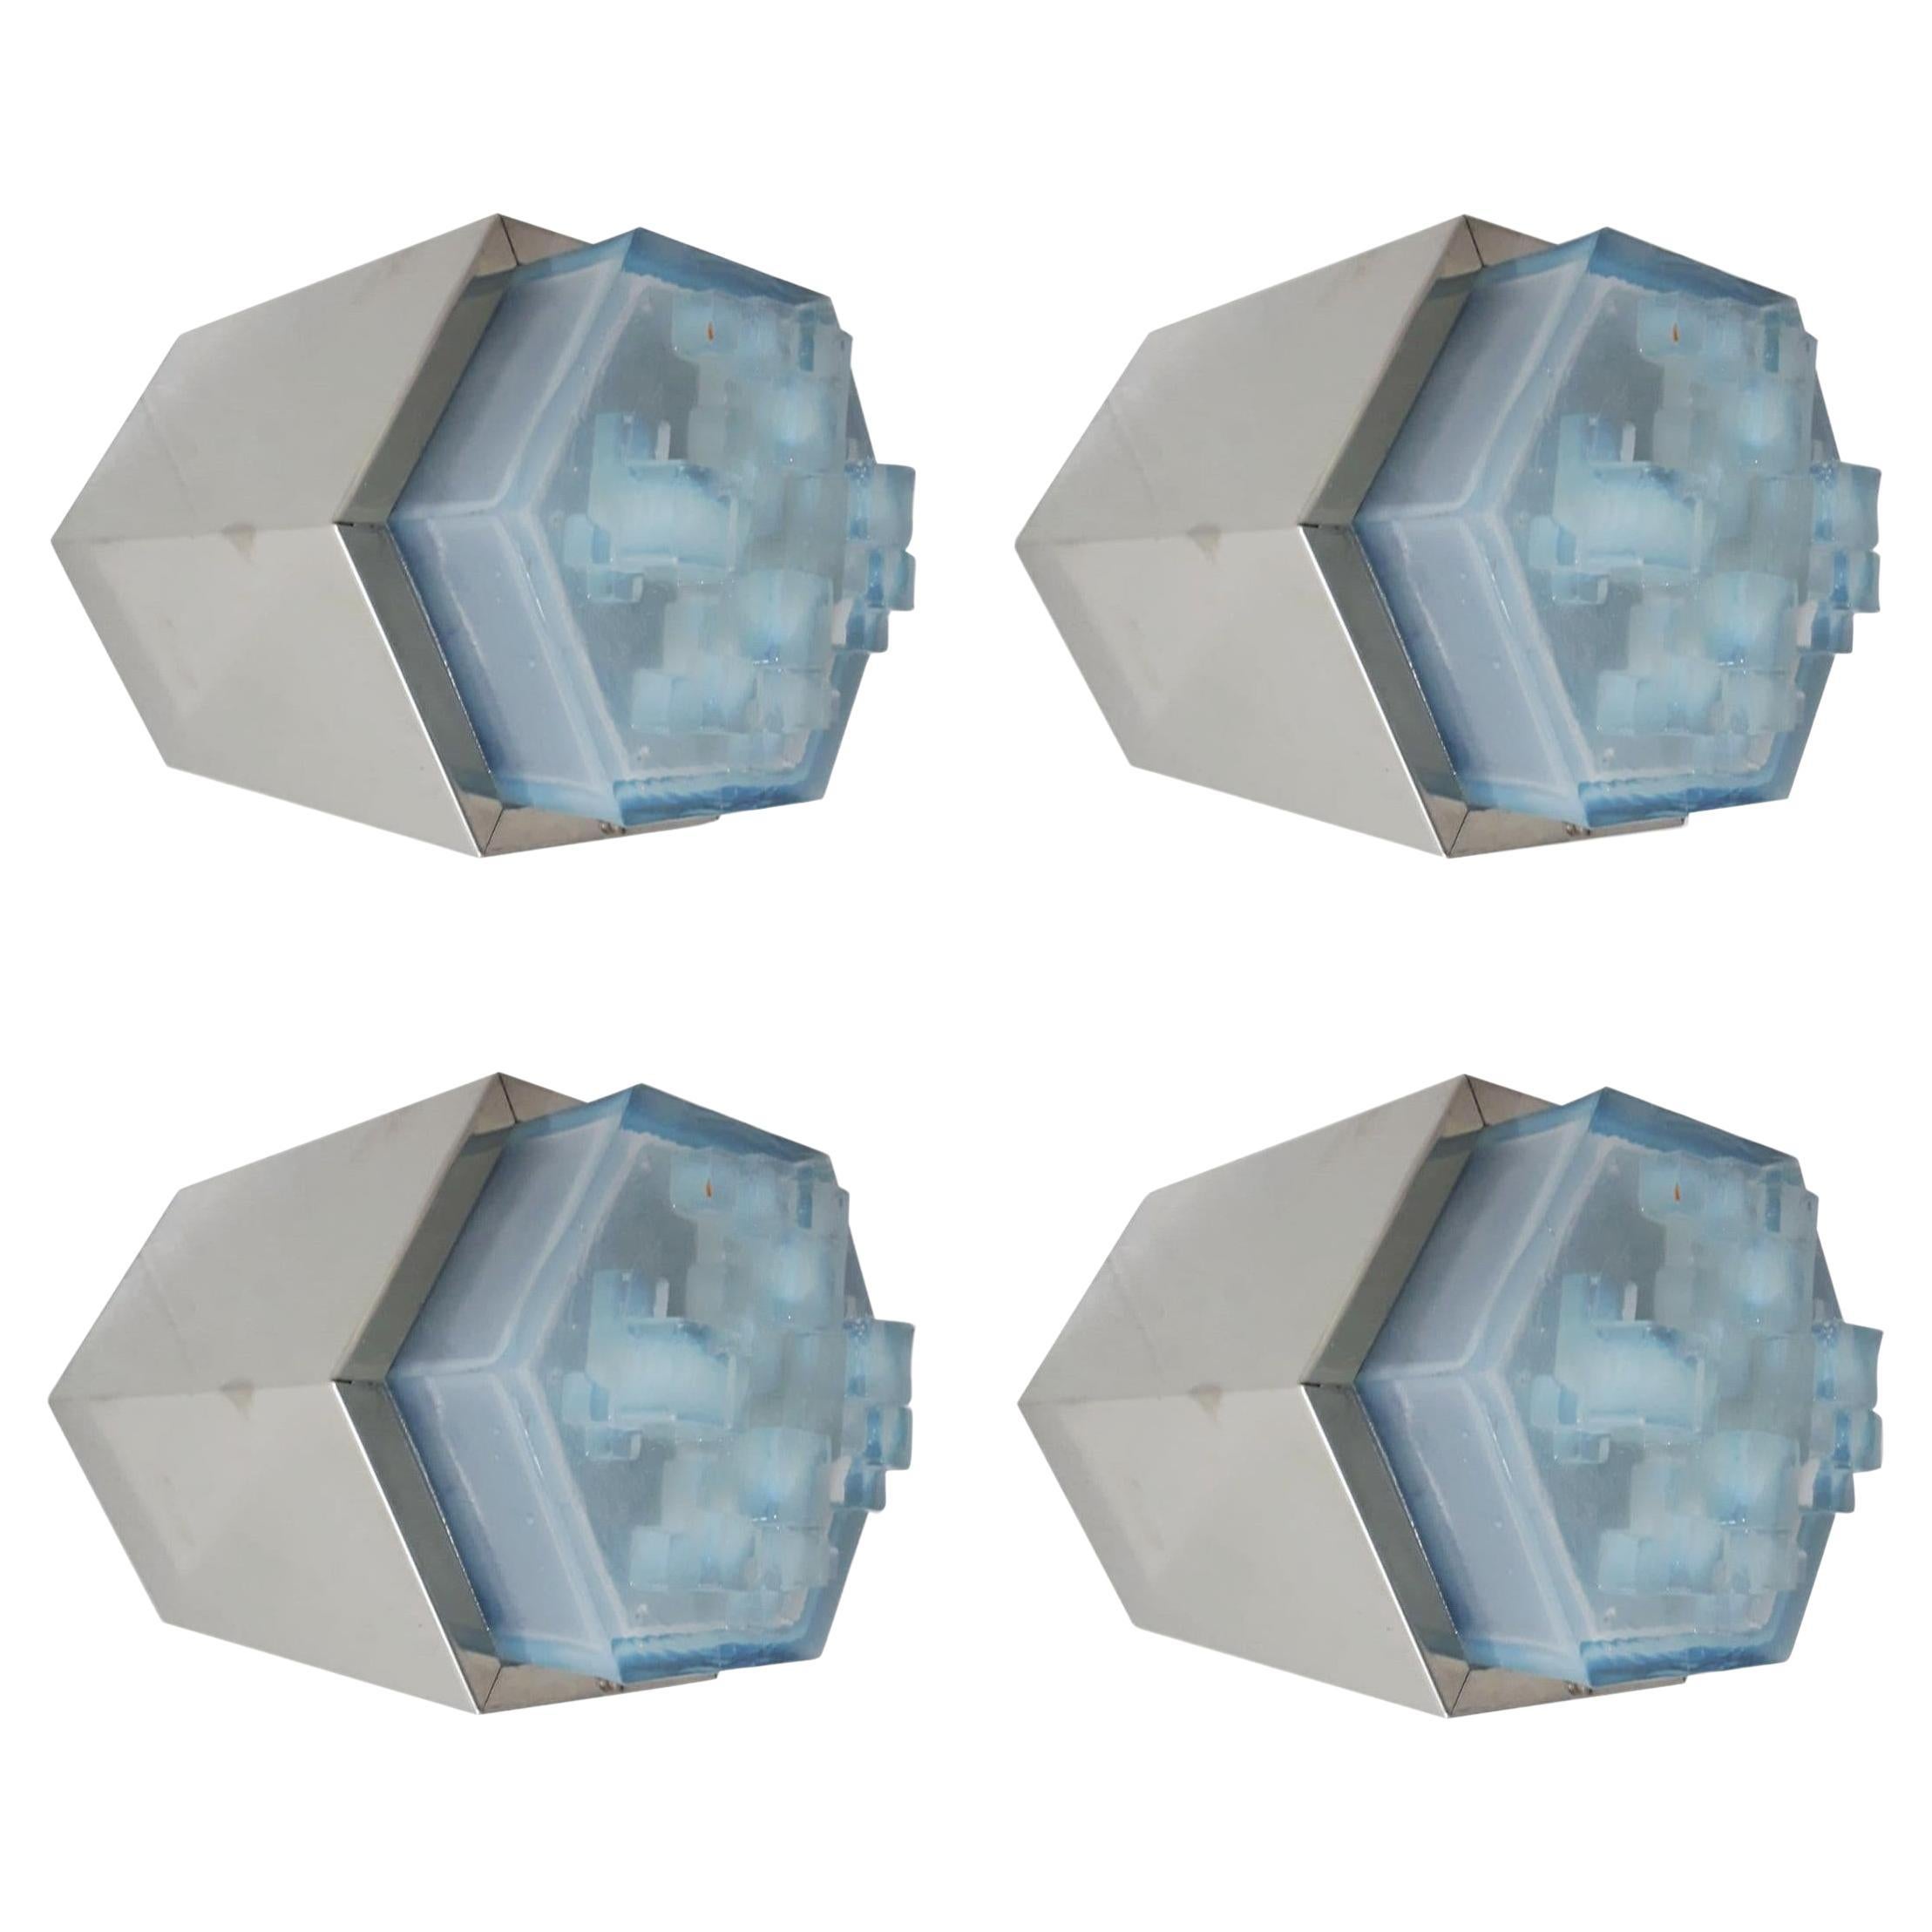 Hexagonal Modular Sconces / Flush Mounts by Poliarte - 4 available For Sale